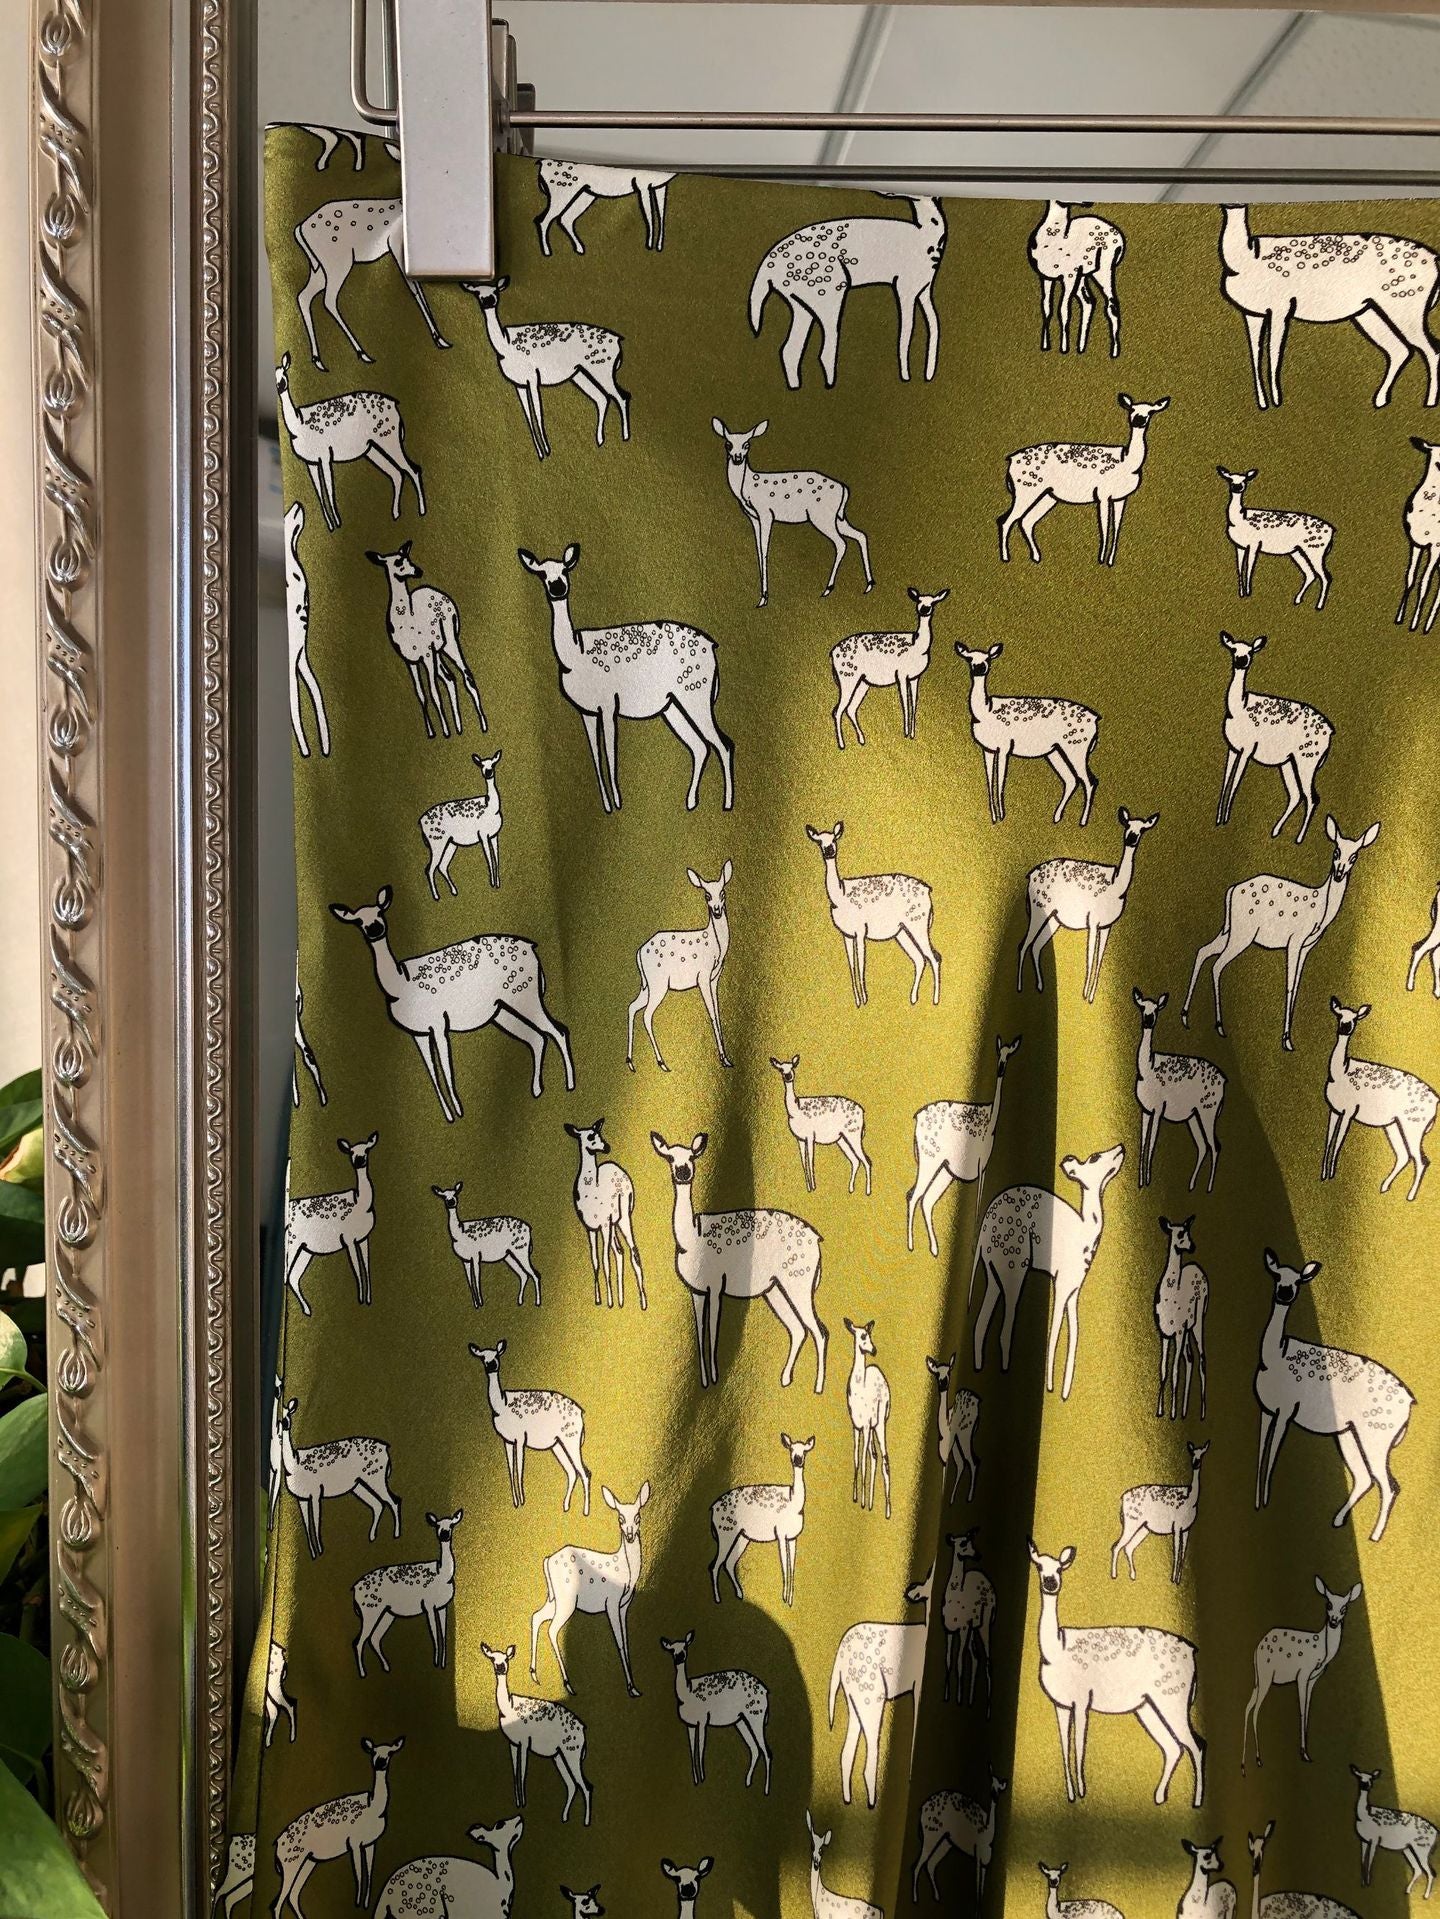 Elegant Sika Deer Print Sandwashed Silk Bias-Cut Skirt with Elastic Waist in Light Mustard Green